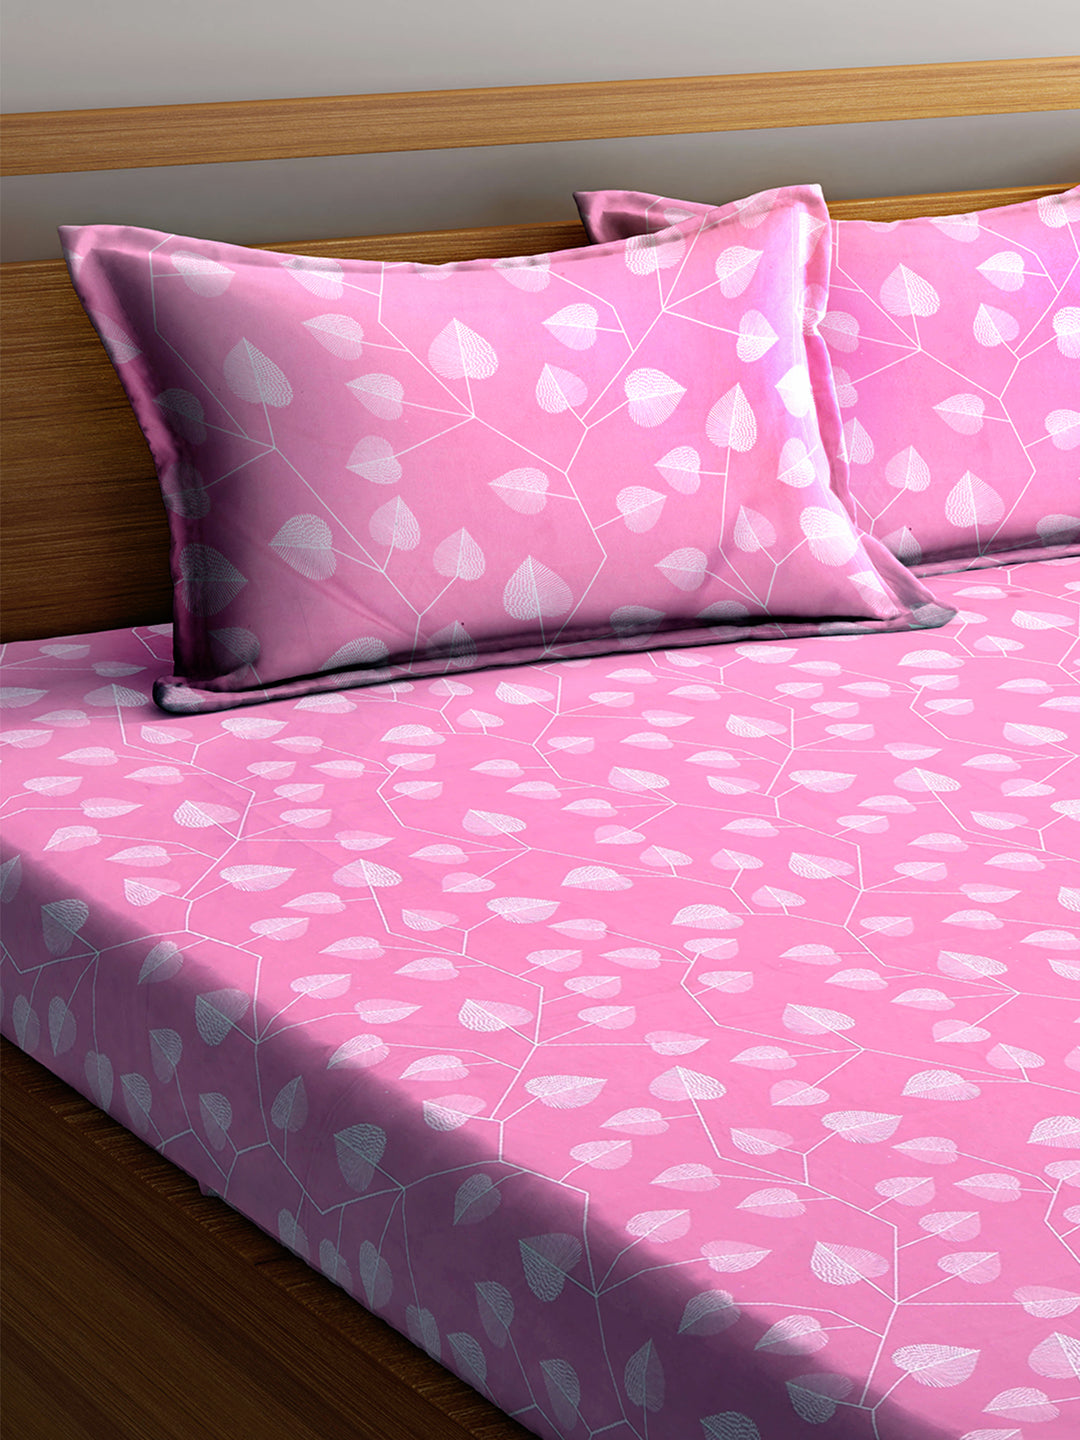 Arrabi Pink Floral TC Polycotton Double Size Bedsheet with 2 Pillow Cover (255 x 225 cm)